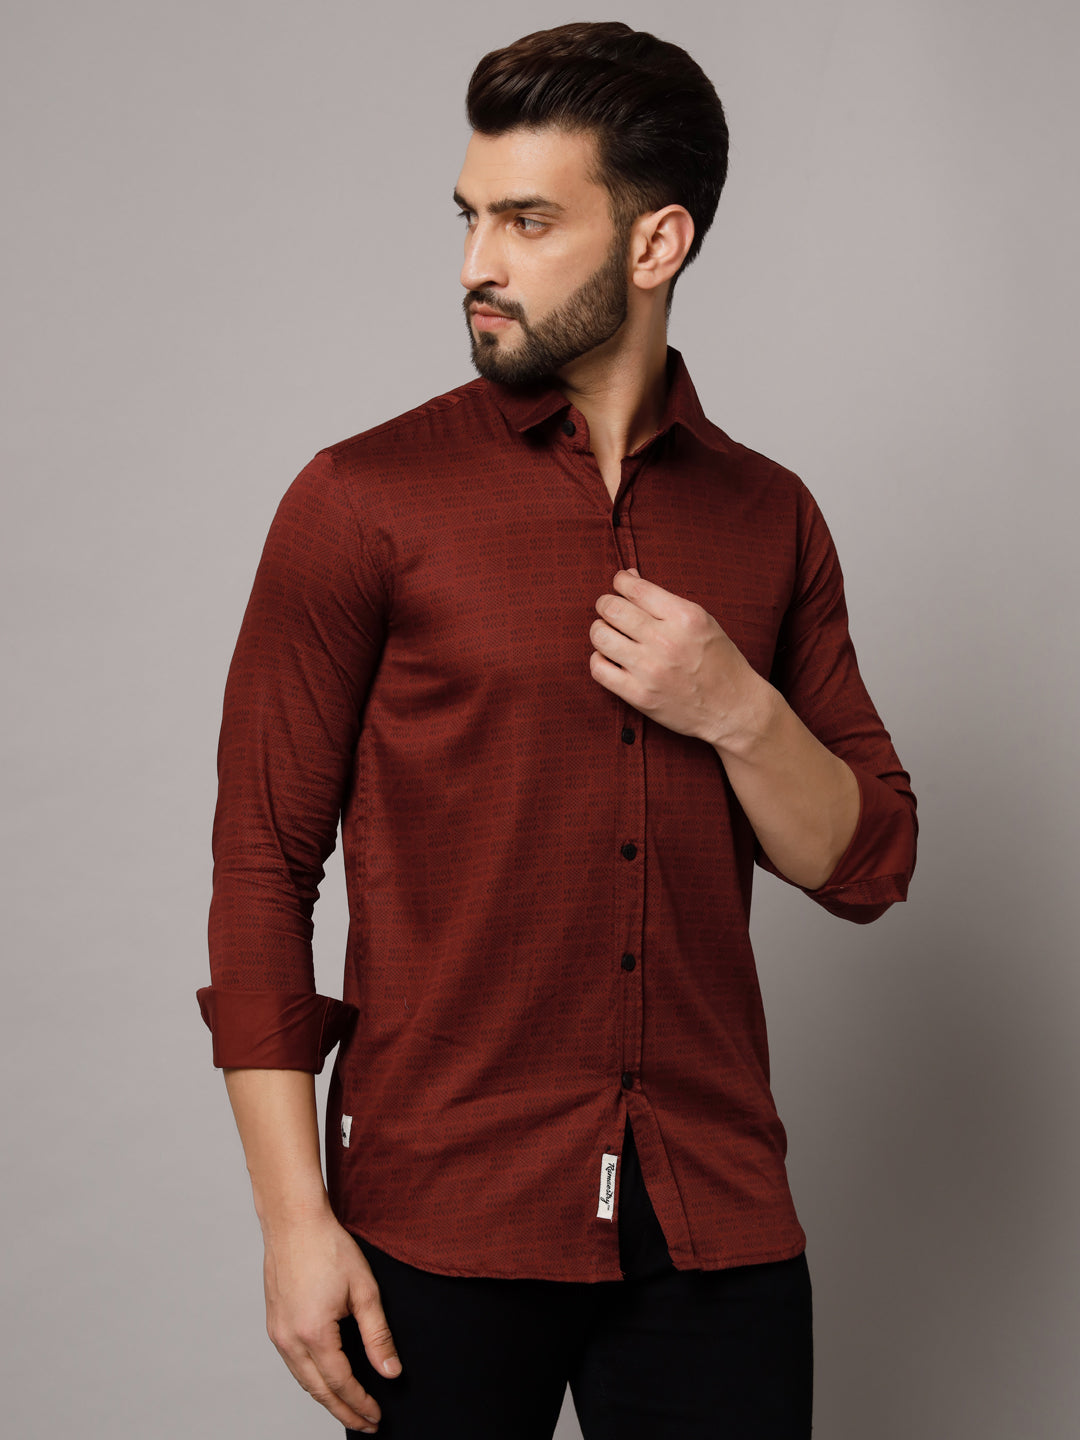 Buy Maroon Burgundy Coat Pant Black Shirt for Men Stylish Tuxedo Suit in  Premium Fabric Online in India - Etsy